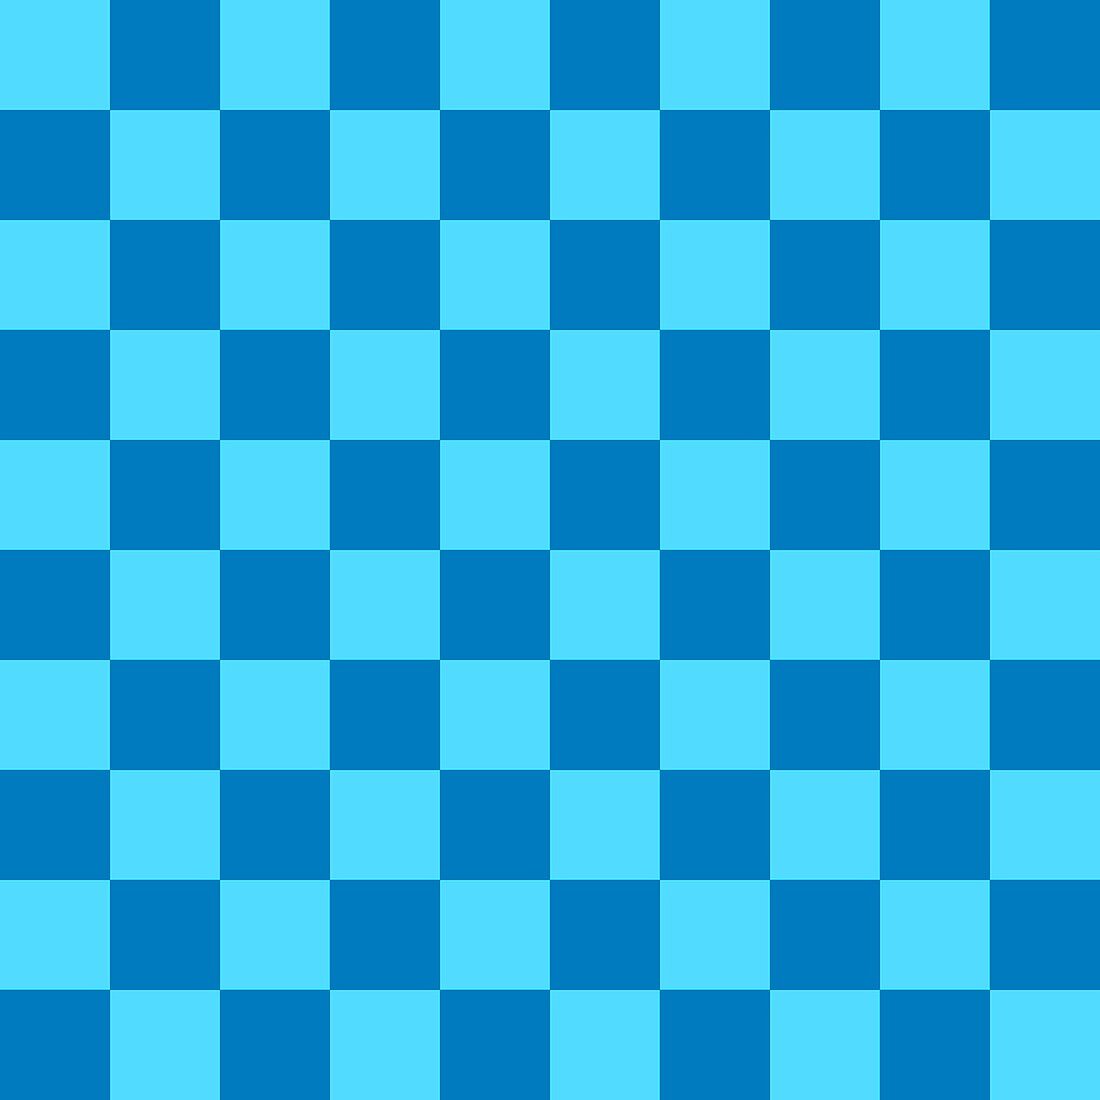 Uniform tiling pattern